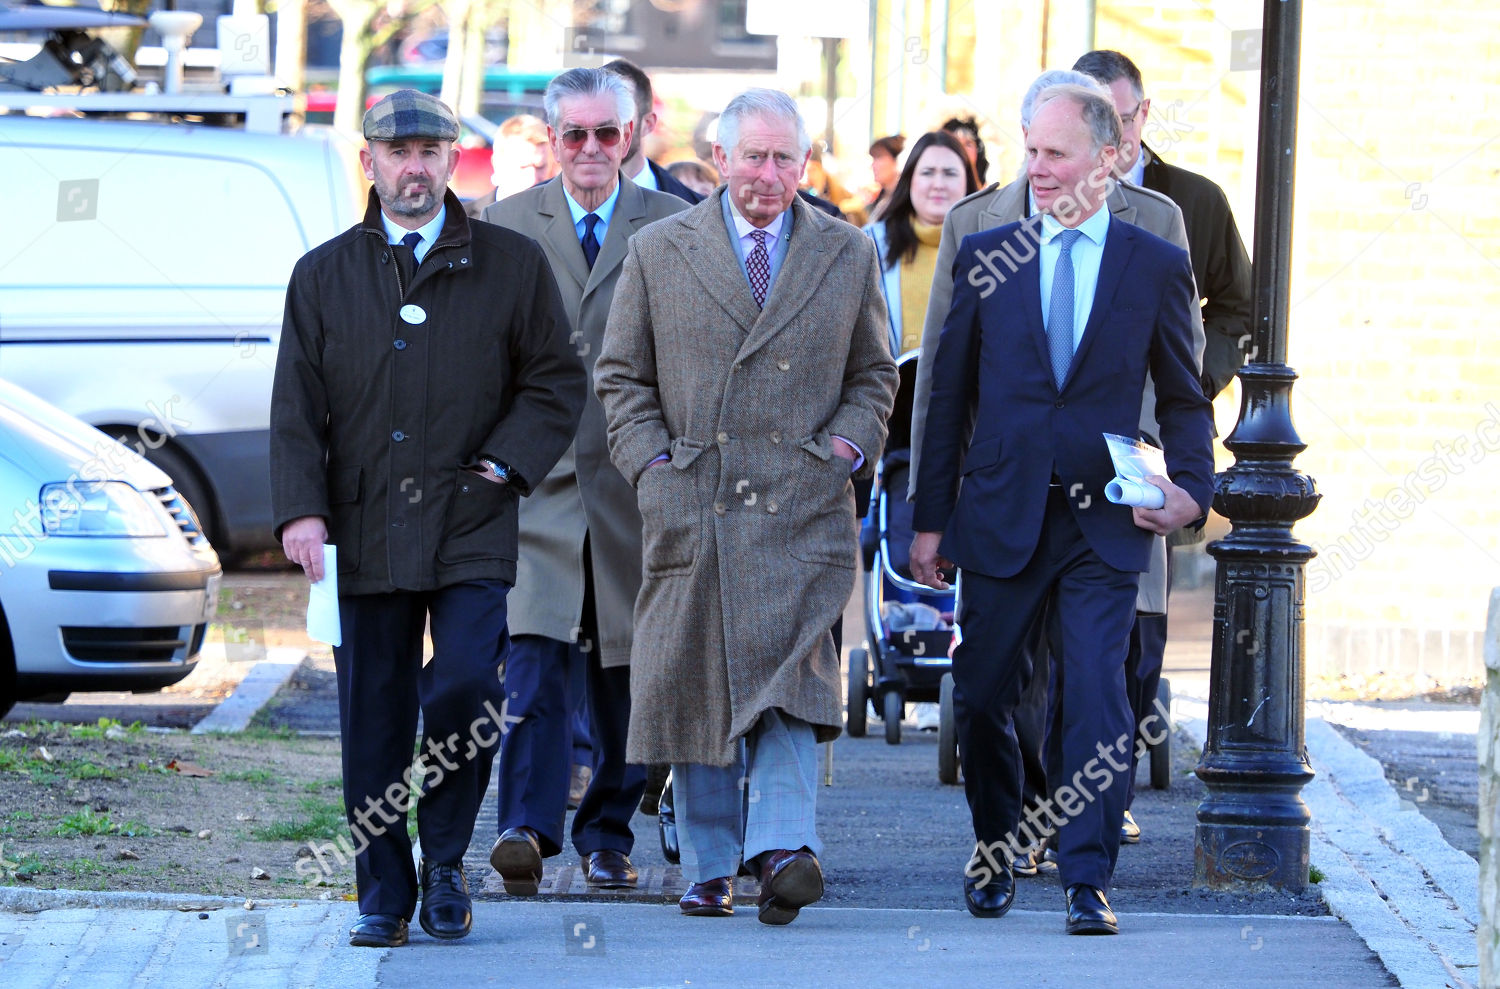 prince-charles-visit-to-poundbury-dorset-uk-shutterstock-editorial-9993035v.jpg